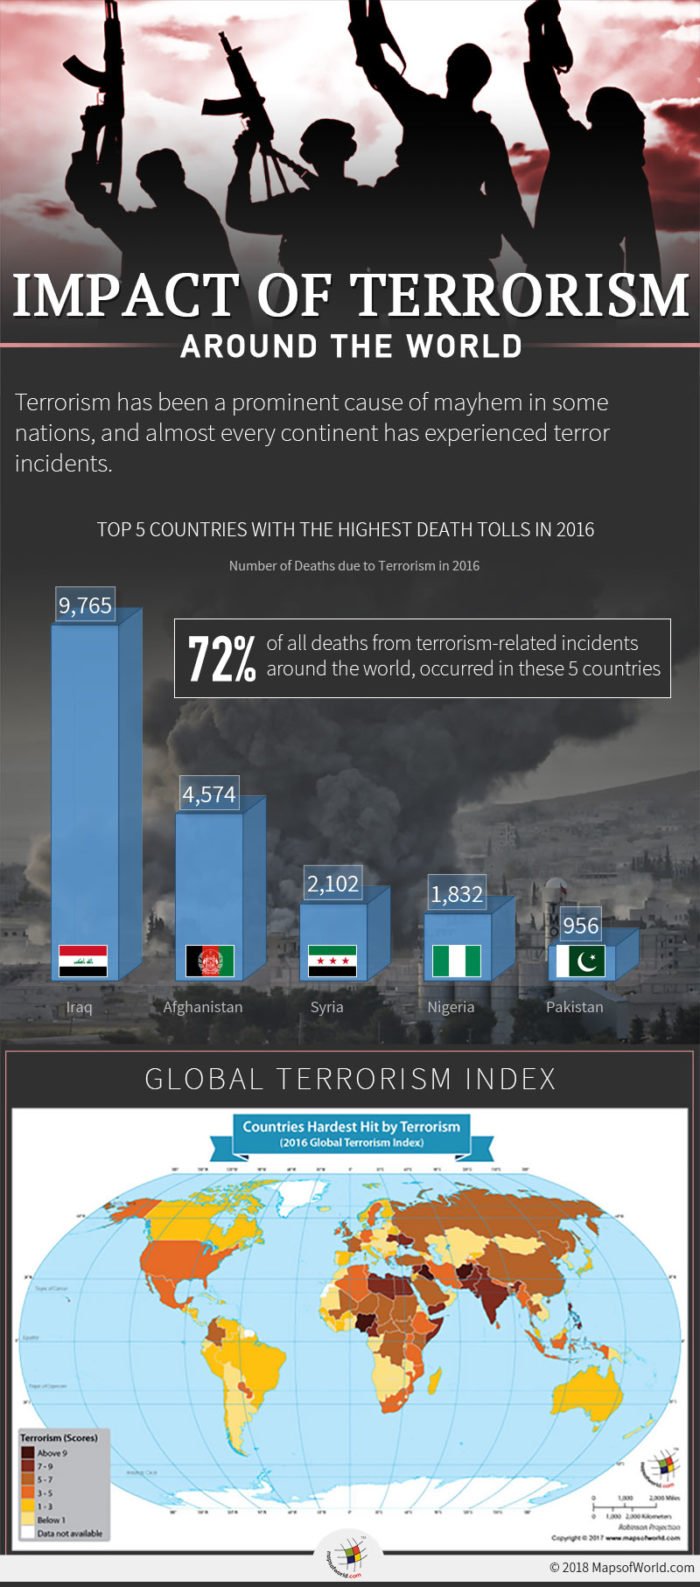 Infographic elaborating Impact of Terrorism